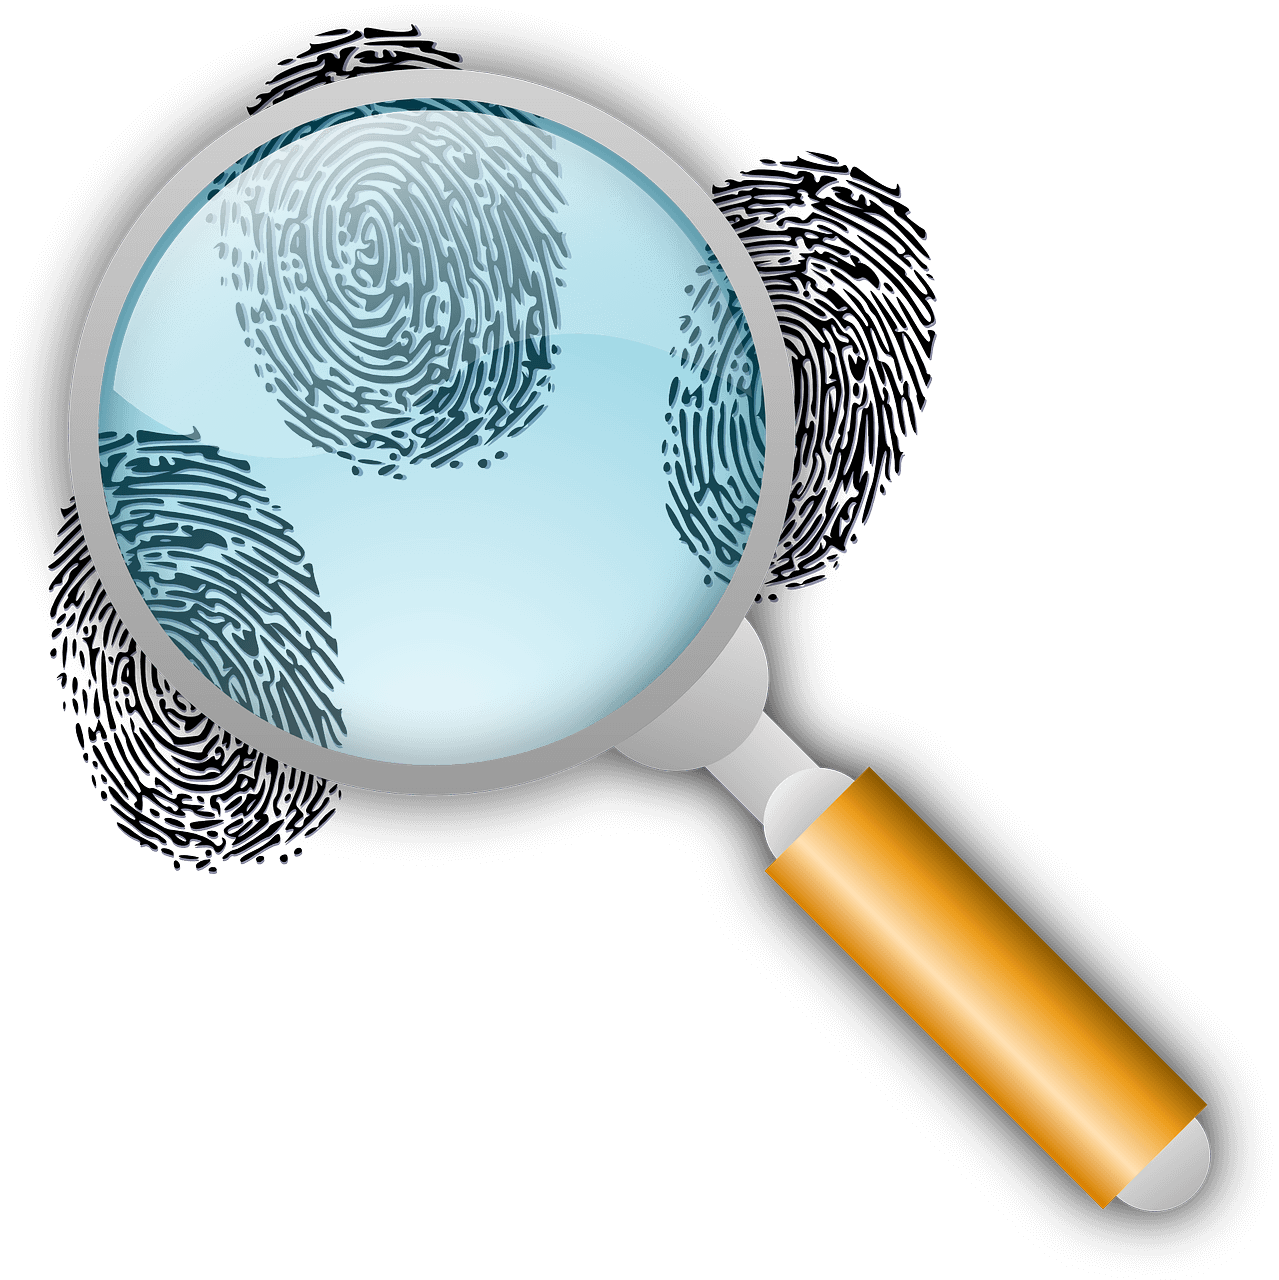 Stylized magnifying glass resting on three oversized fingerprints